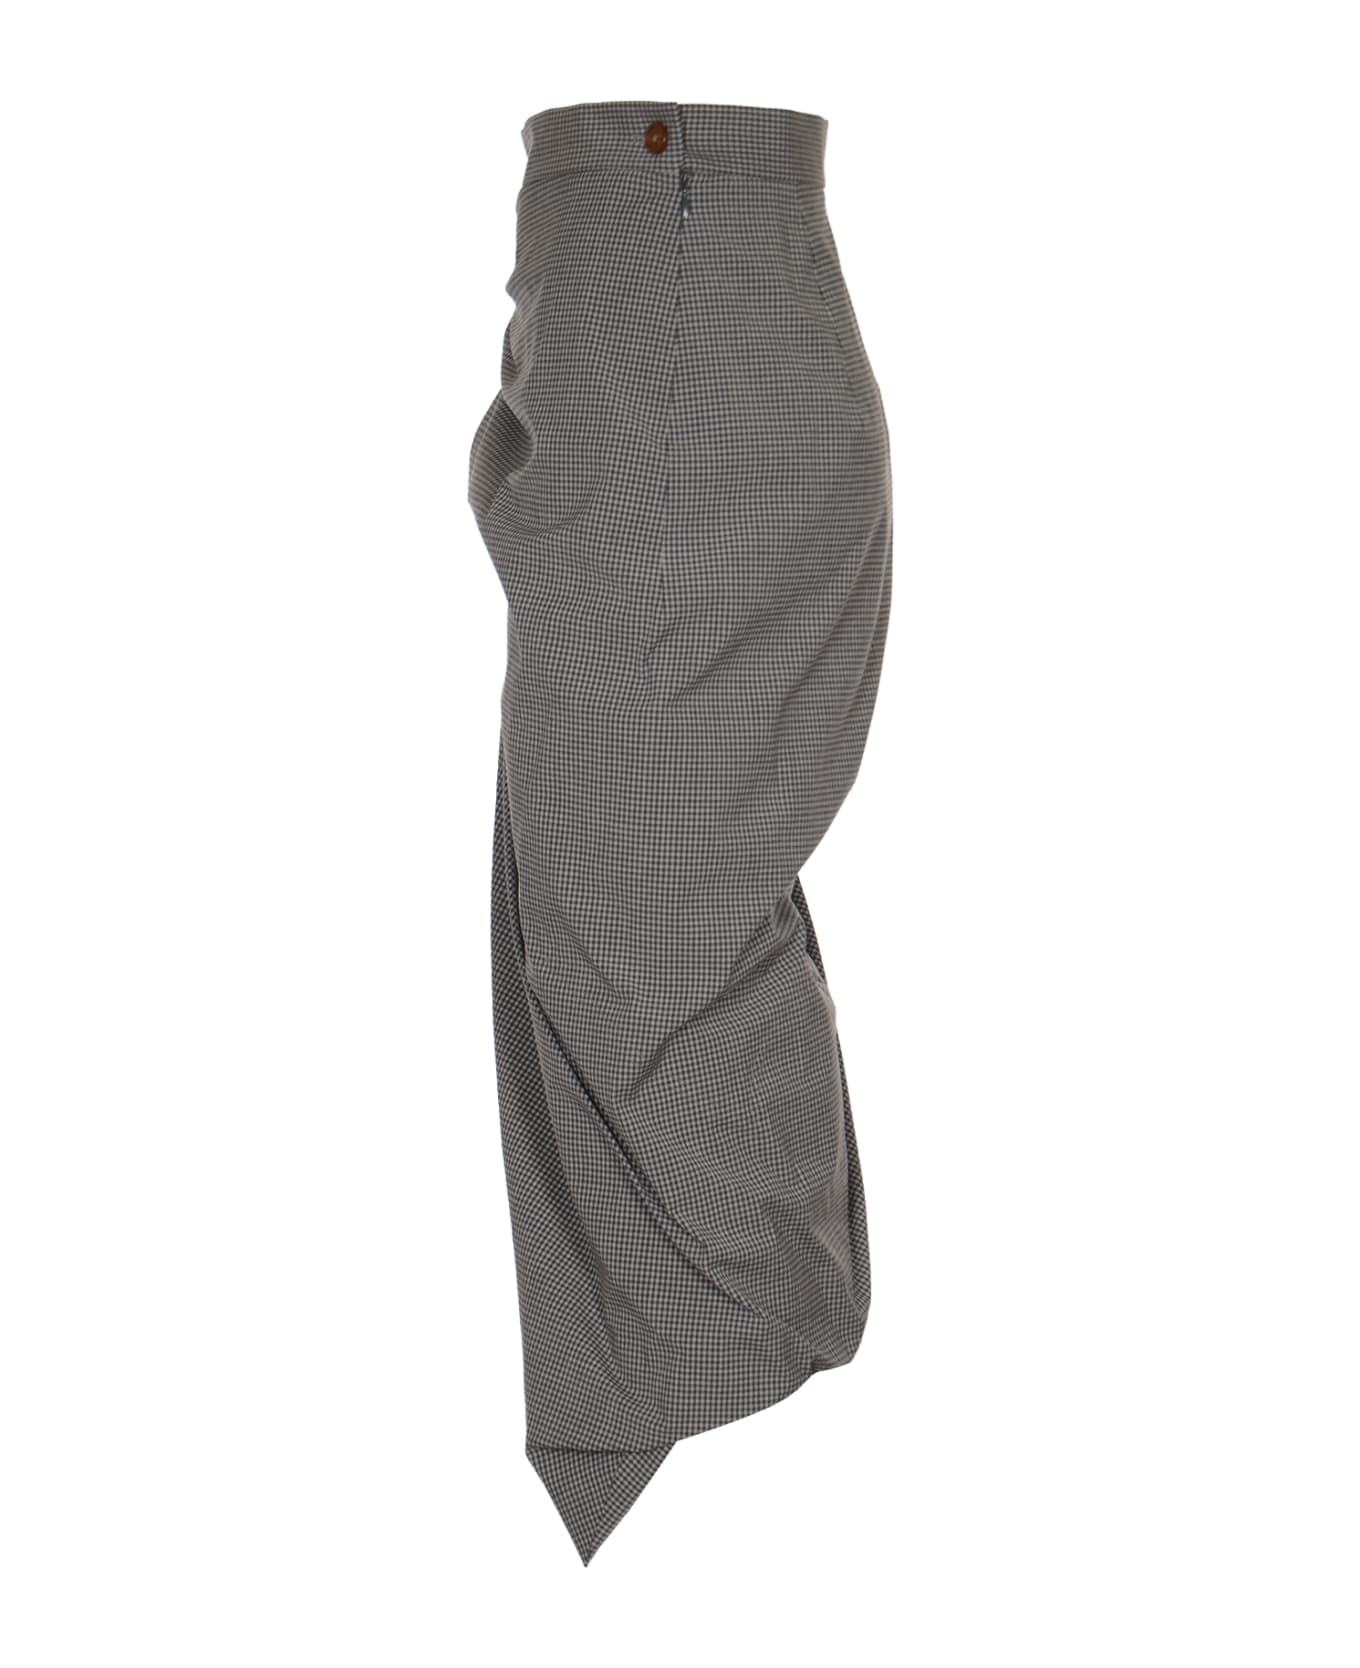 Vivienne Westwood Side Panther Skirt - Gingham スカート